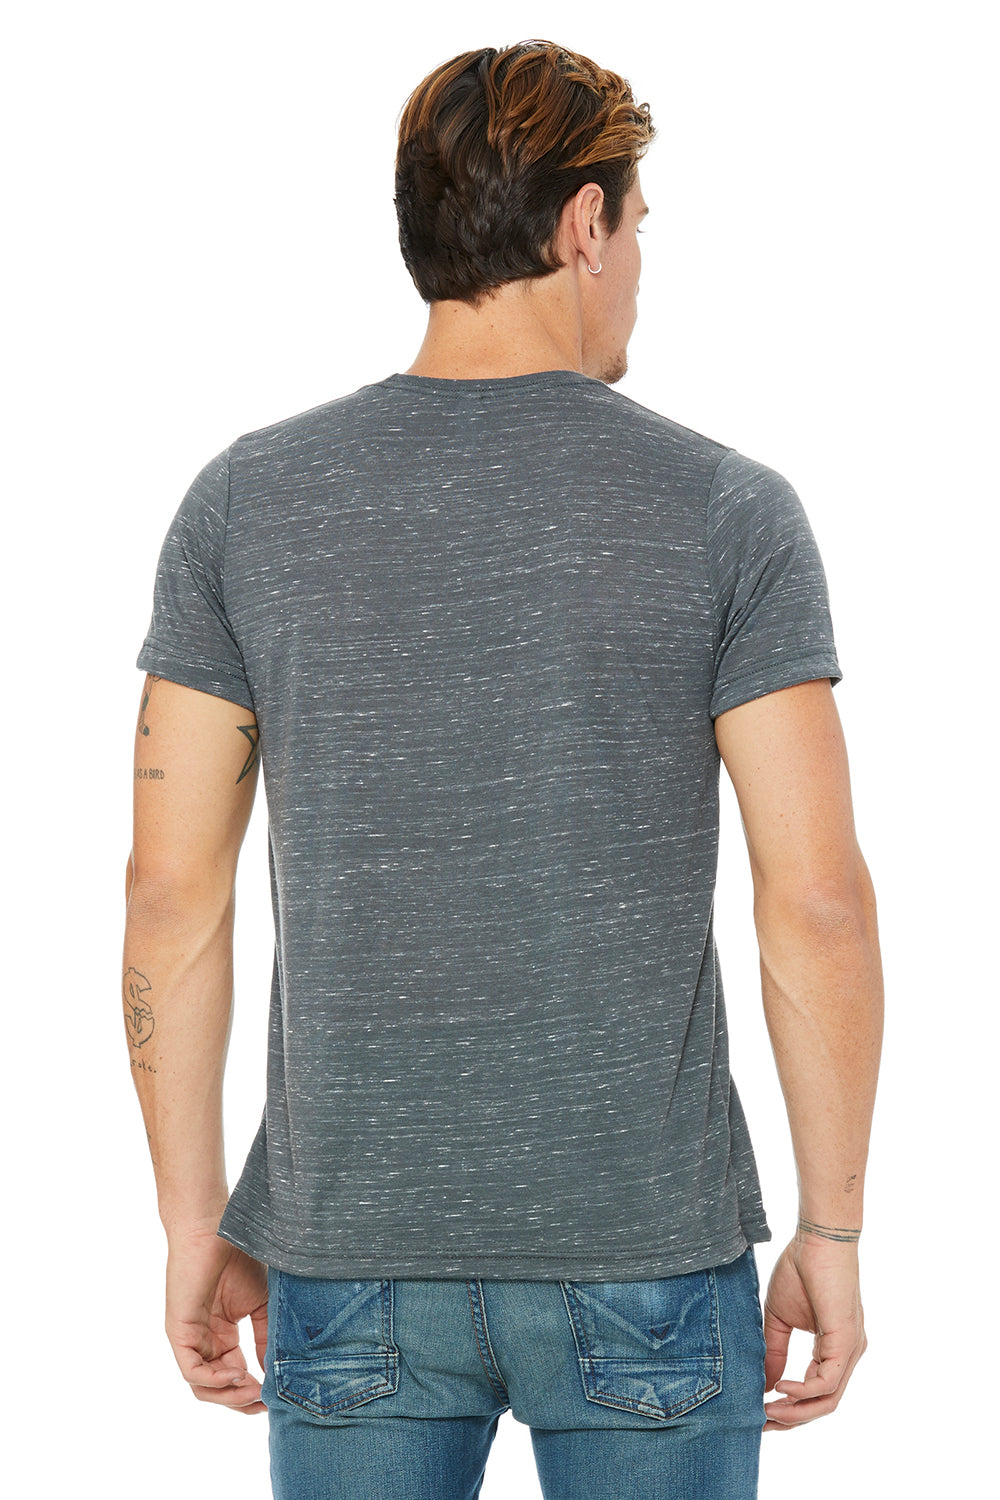 Bella + Canvas 3650 Mens Short Sleeve Crewneck T-Shirt Charcoal Grey Marble Back